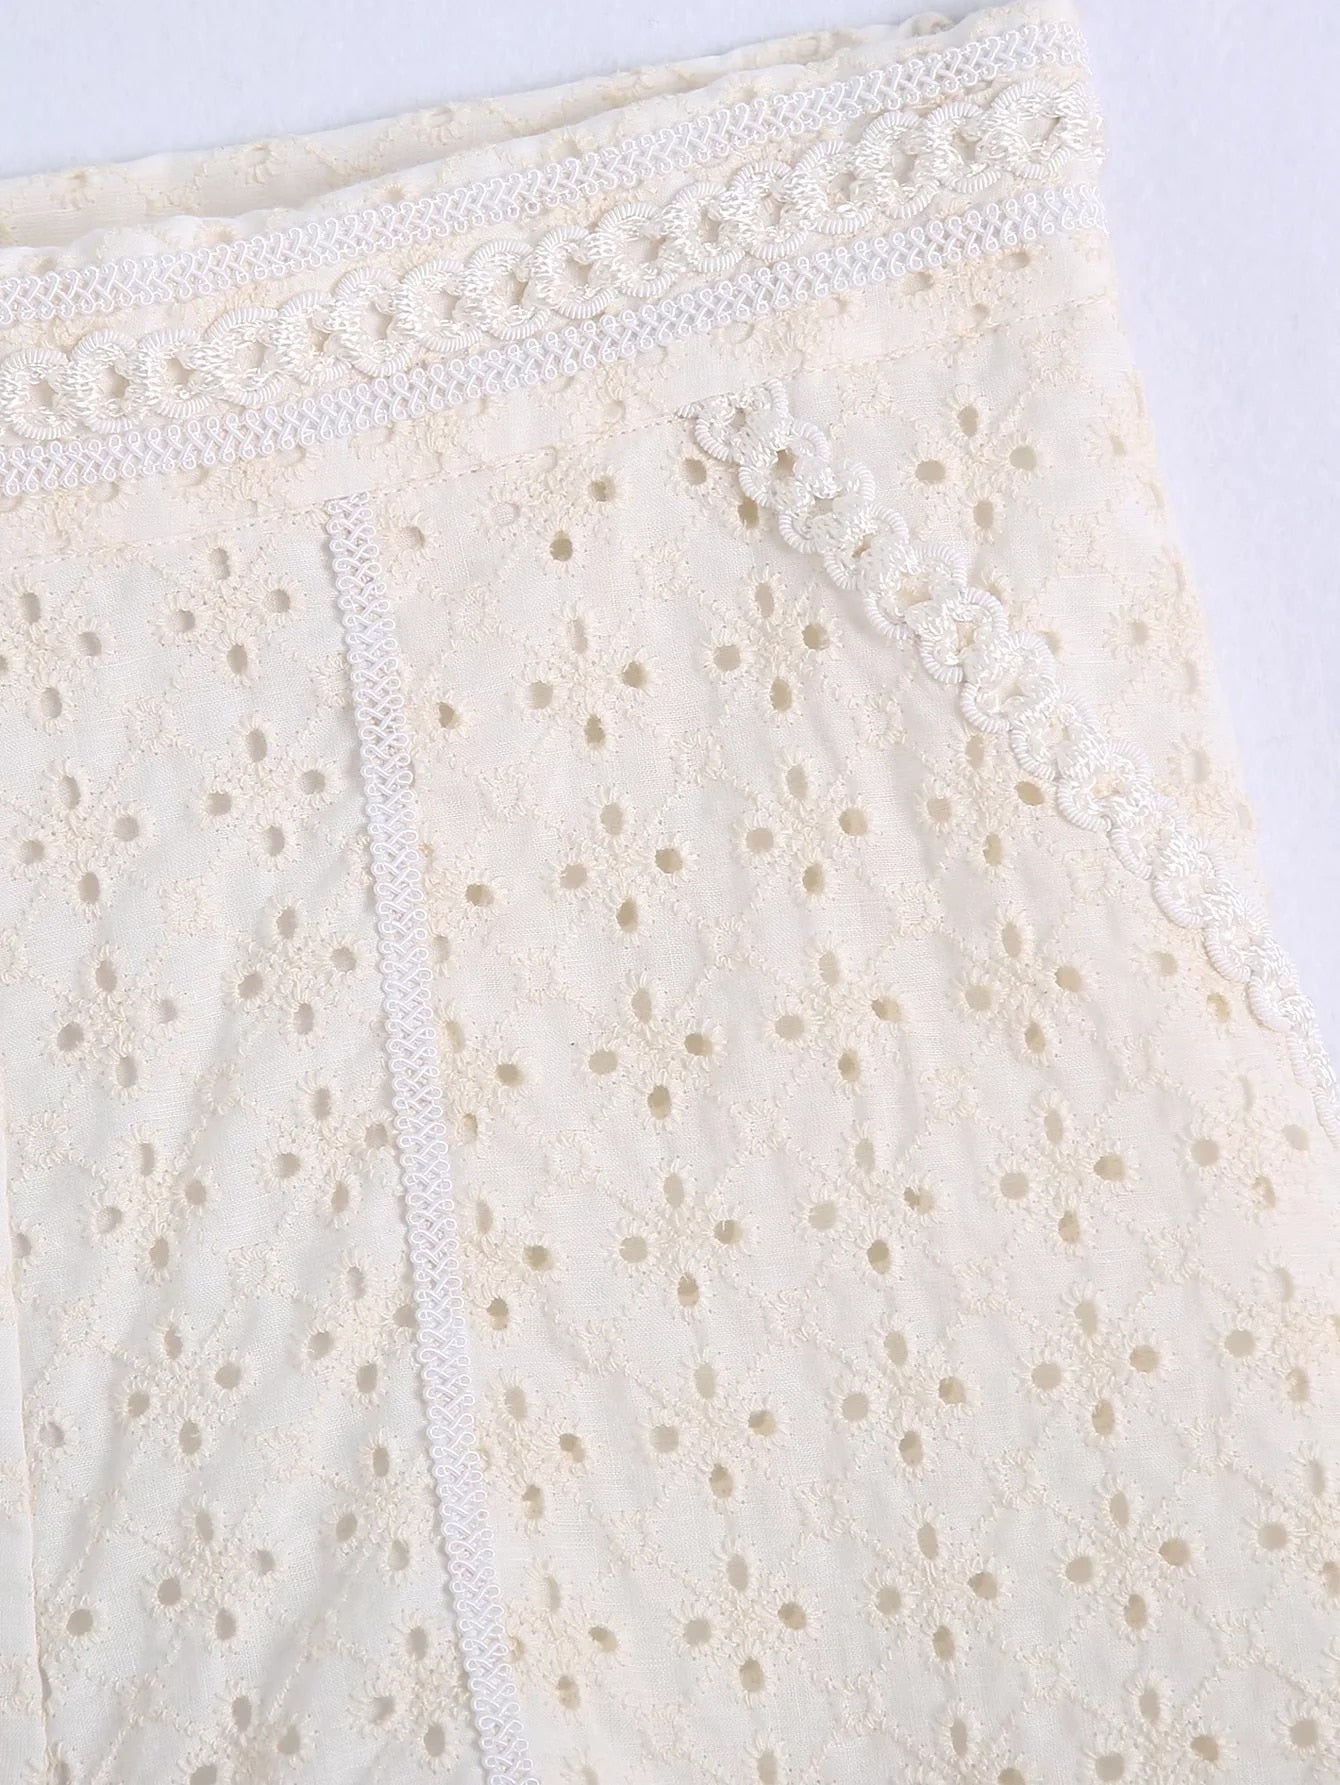 Penny Lace Shorts & Tunic Set … Blonder Mercantile